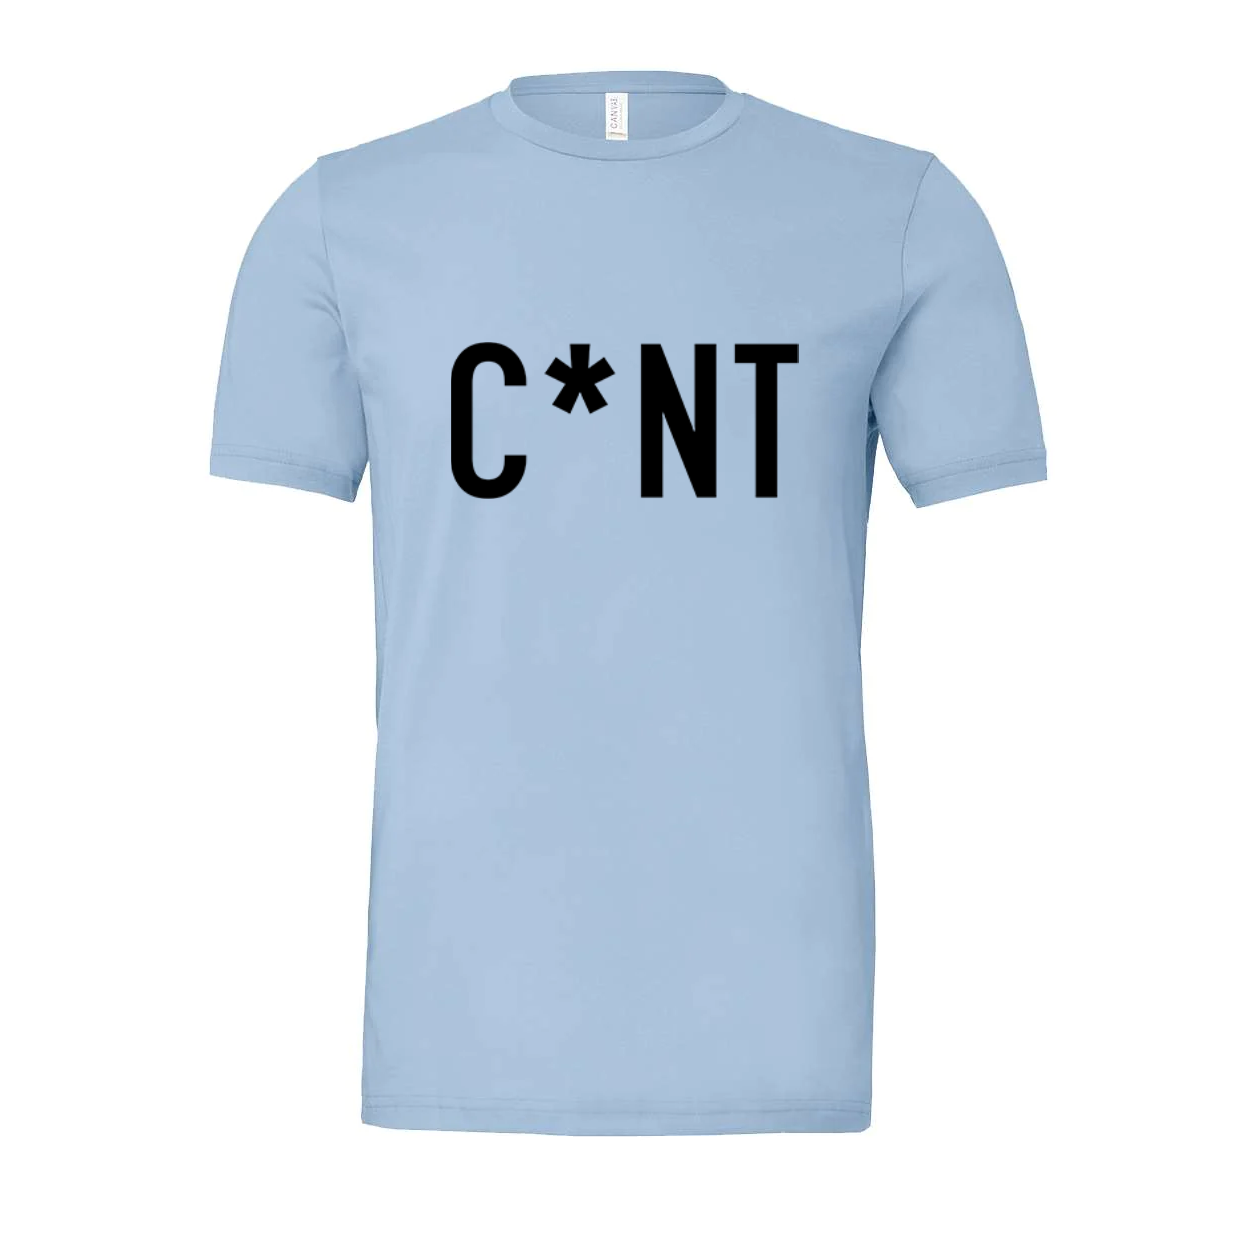 C*nt T-Shirt